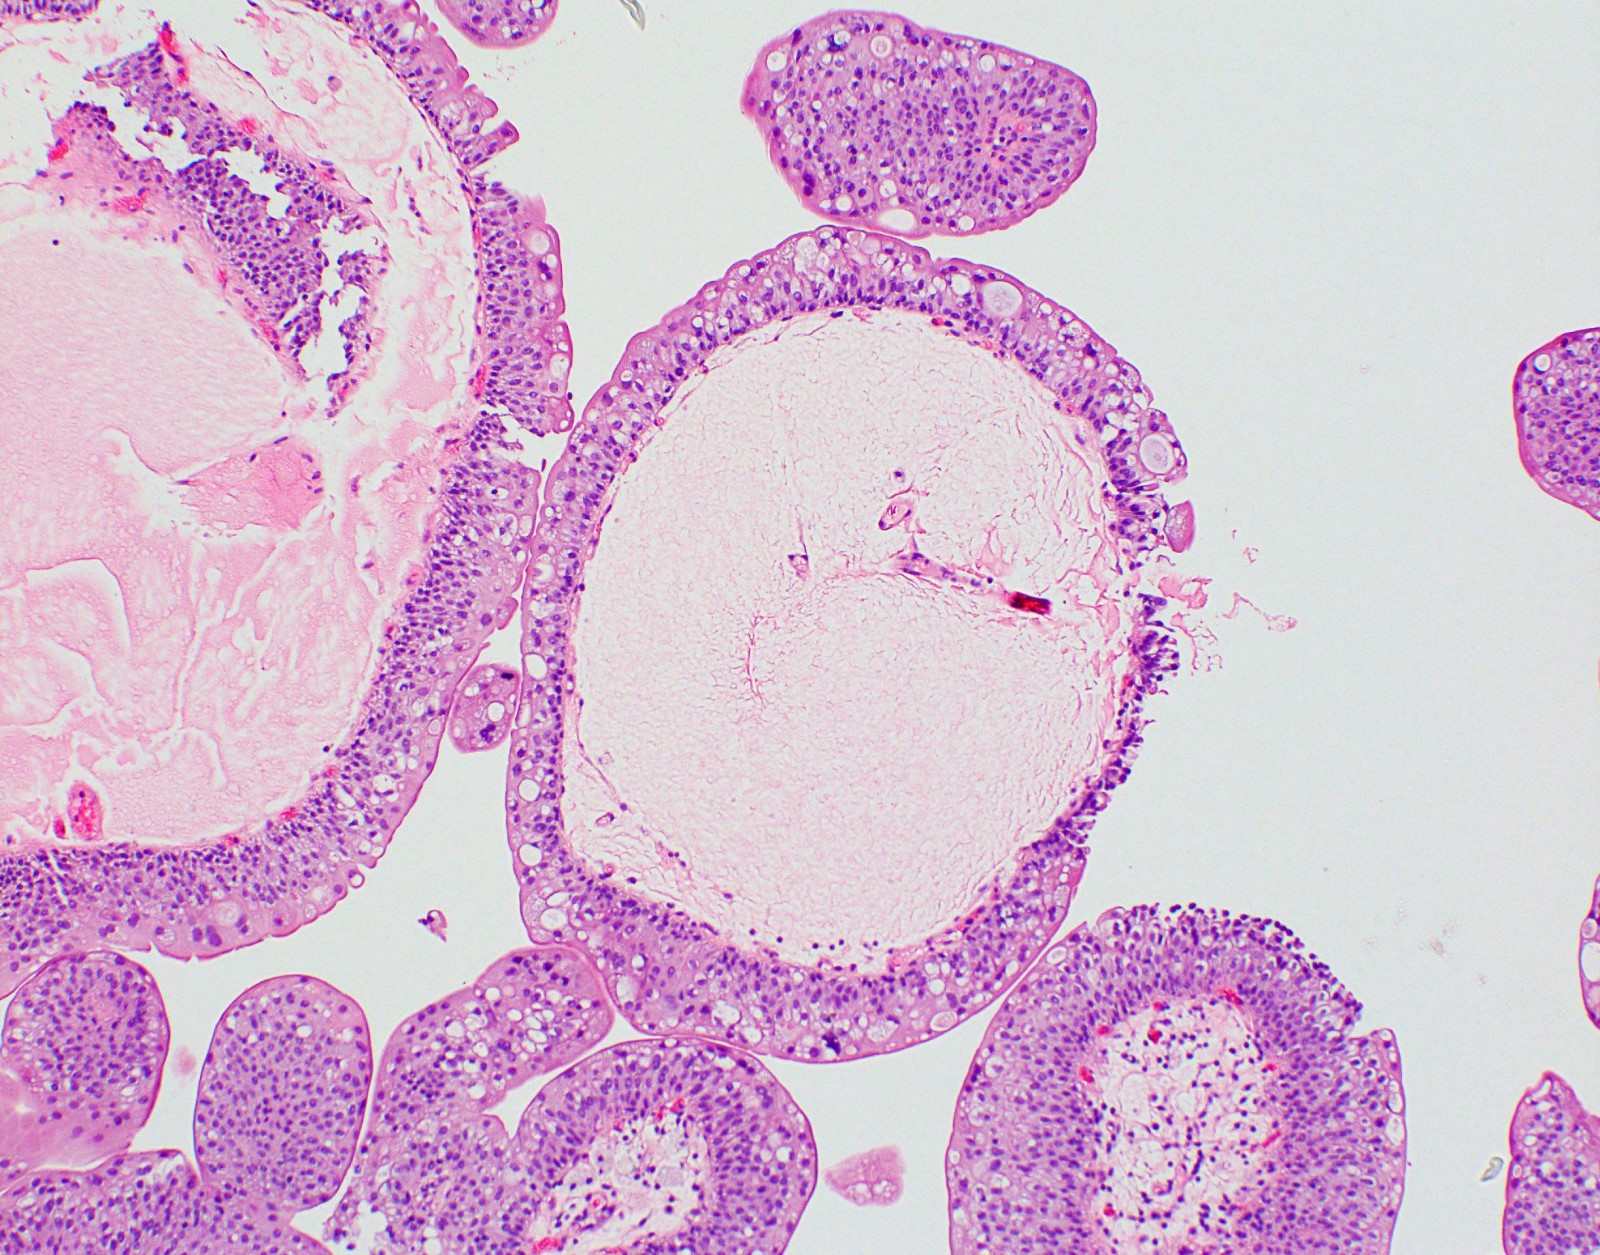 papilloma urothelial pathology outlines